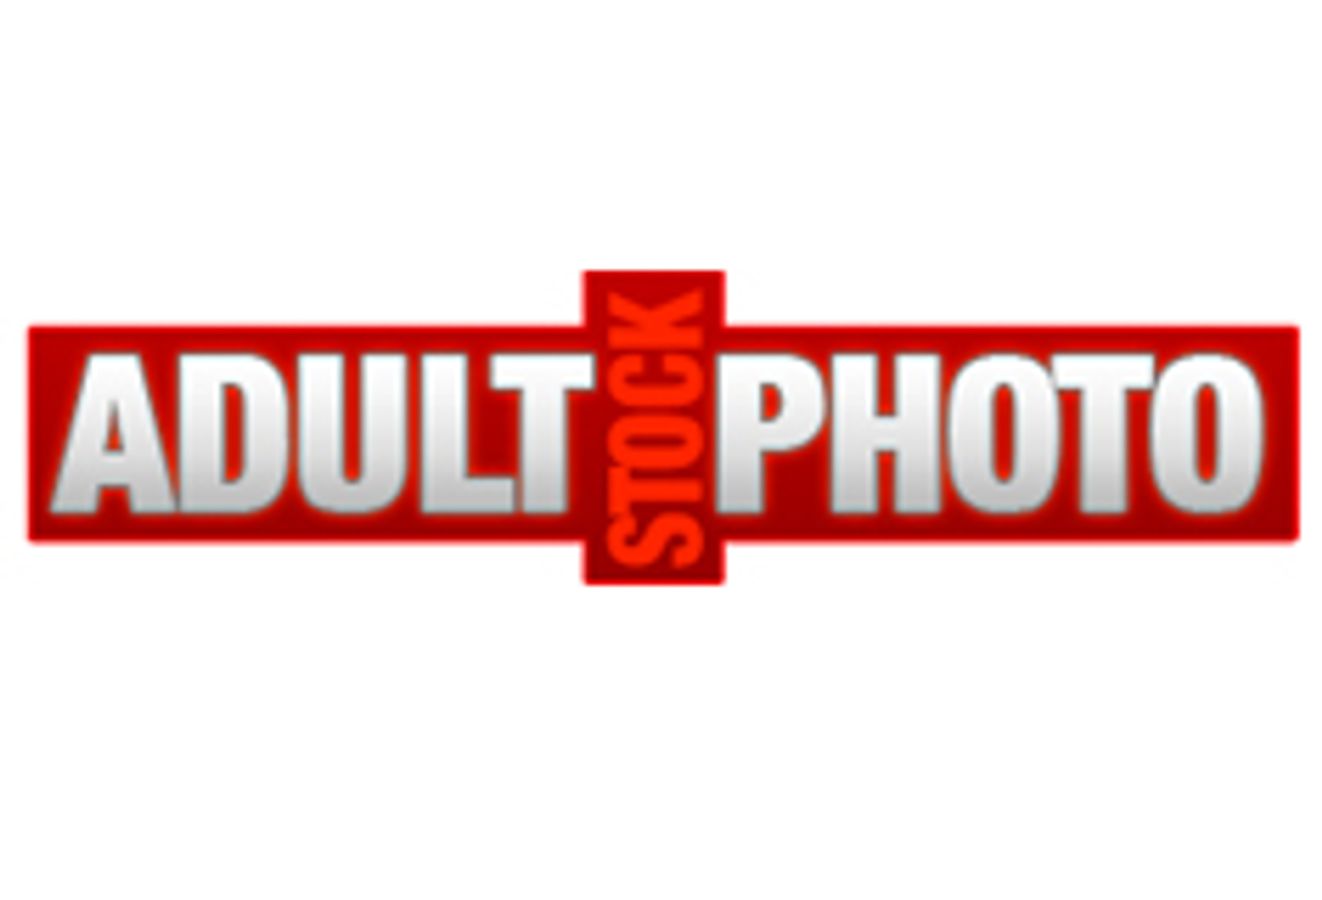 AdultStockPhoto.com